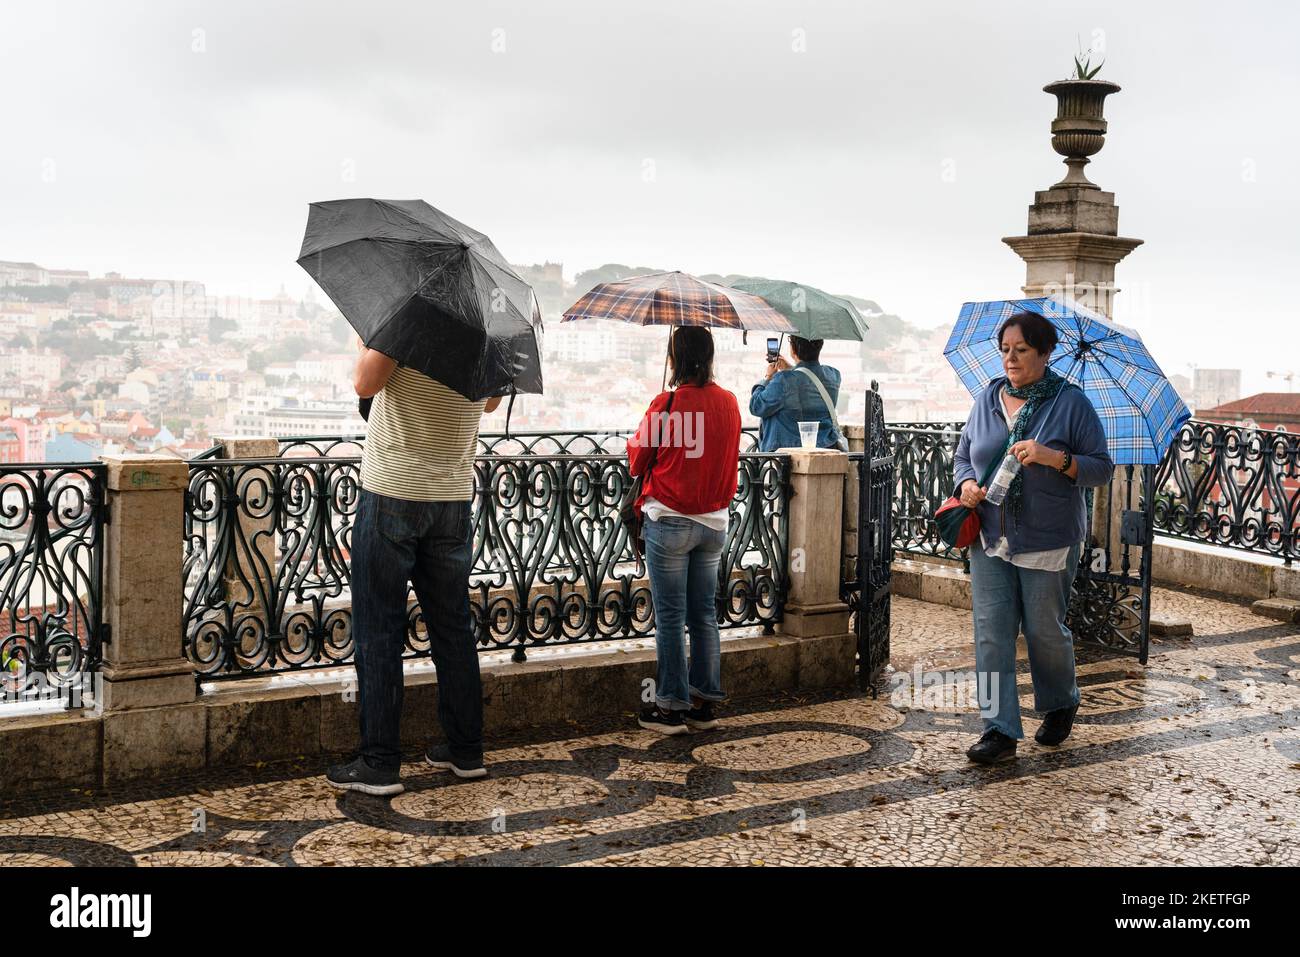 Heavy rain sweeps in obscuring parts of the city at the Miradouro de São Pedro de Alcântara in Lisbon, Portugal. Stock Photo